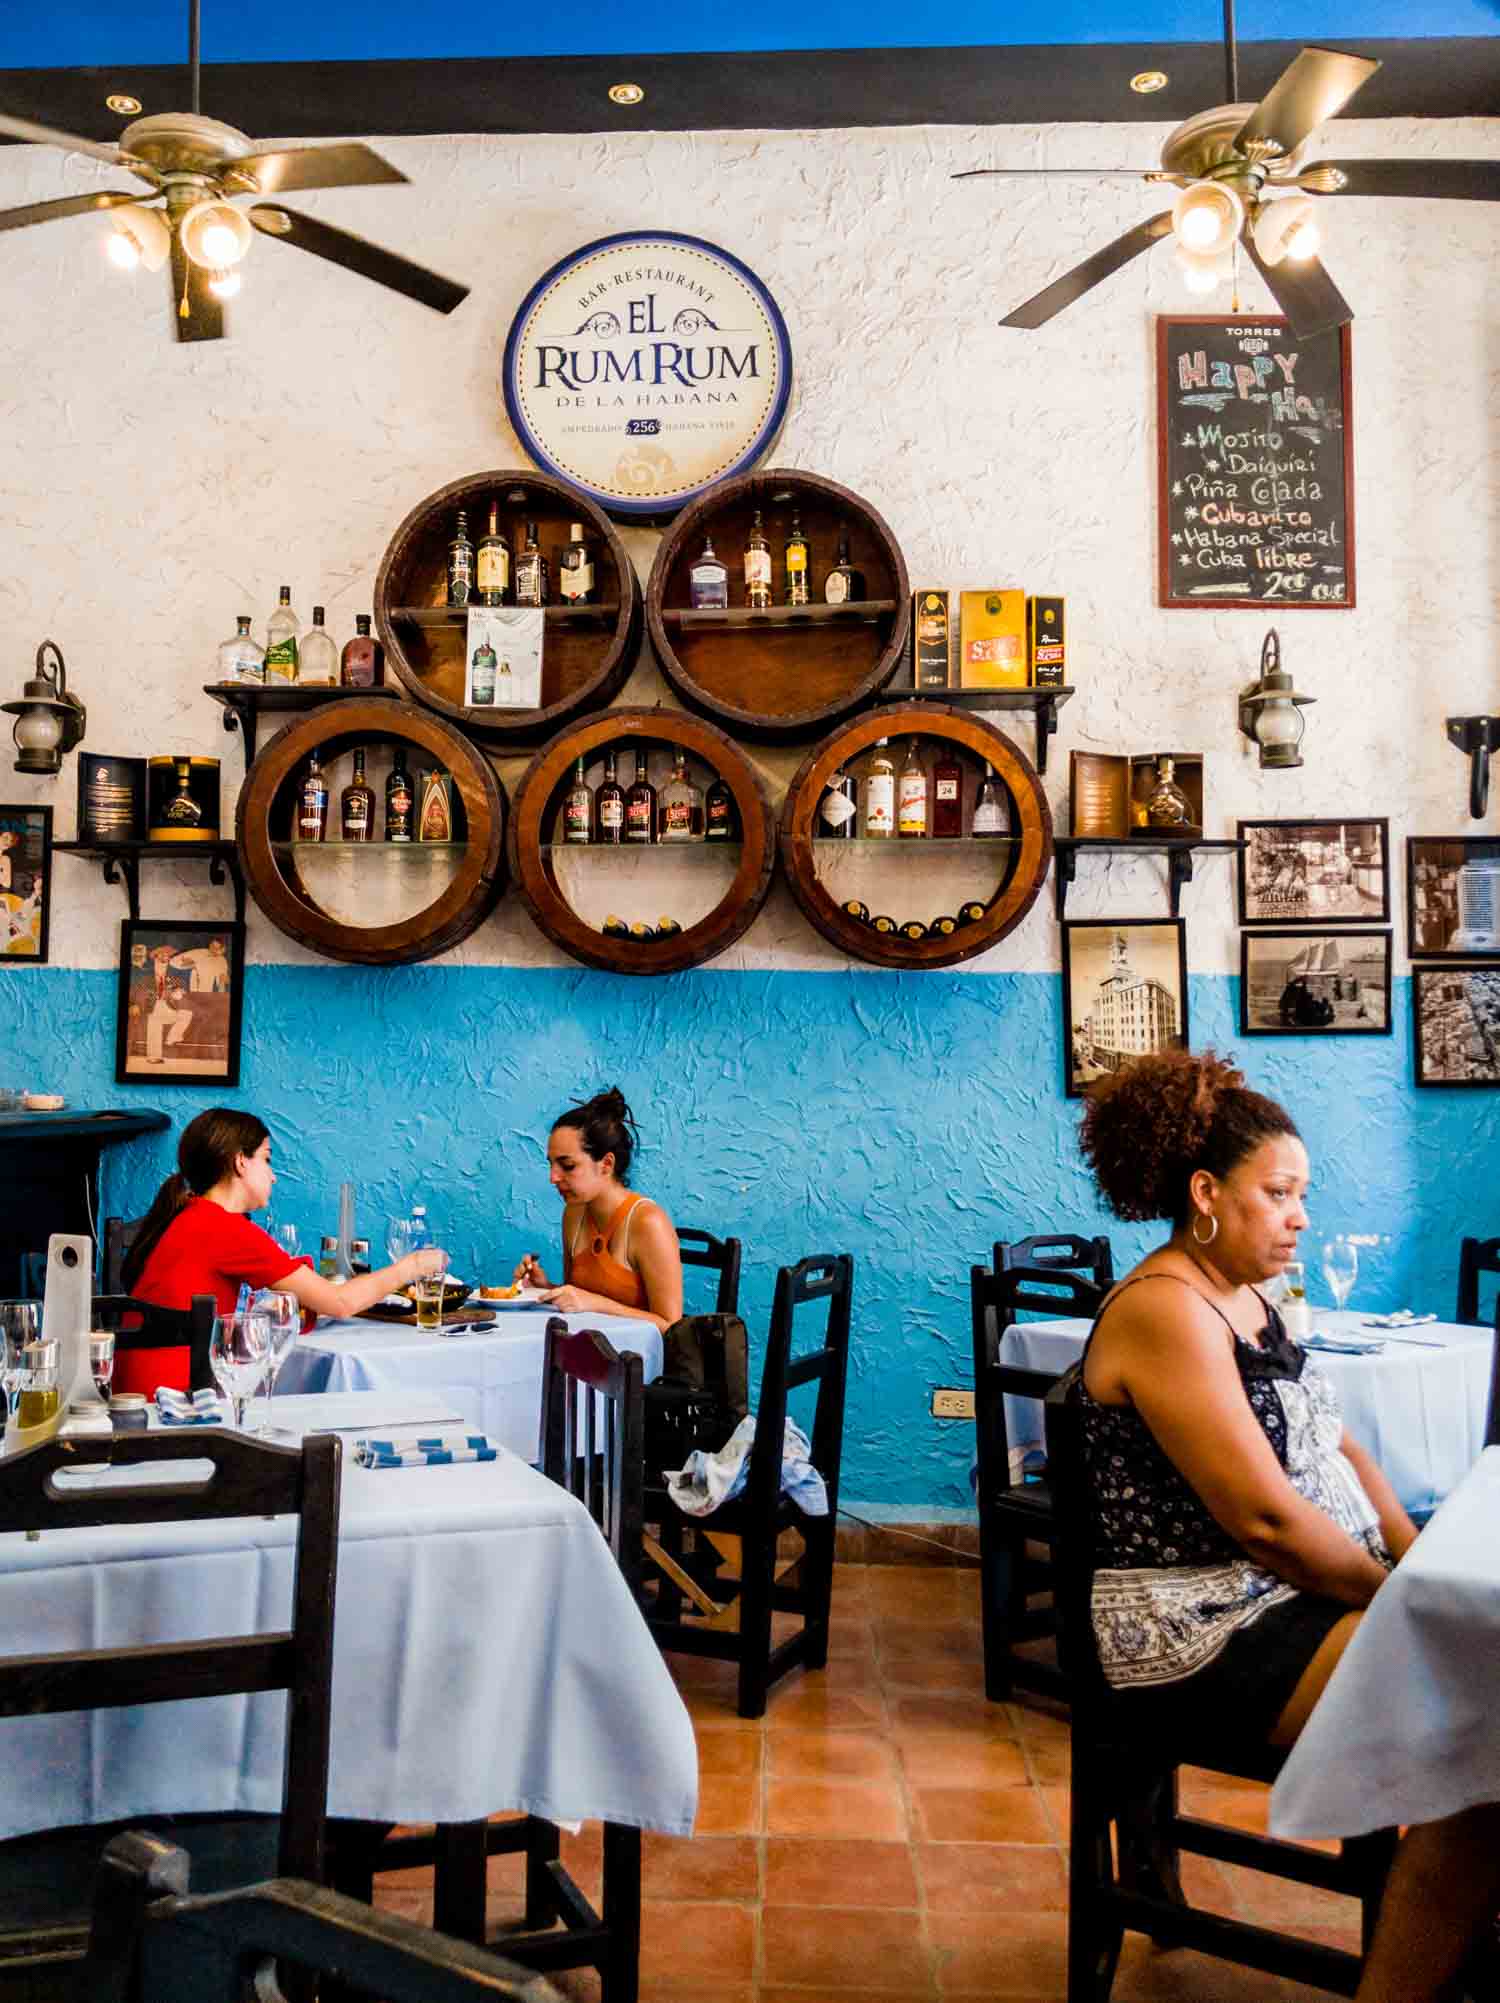 El Rum Rum restaurant in Old Havana